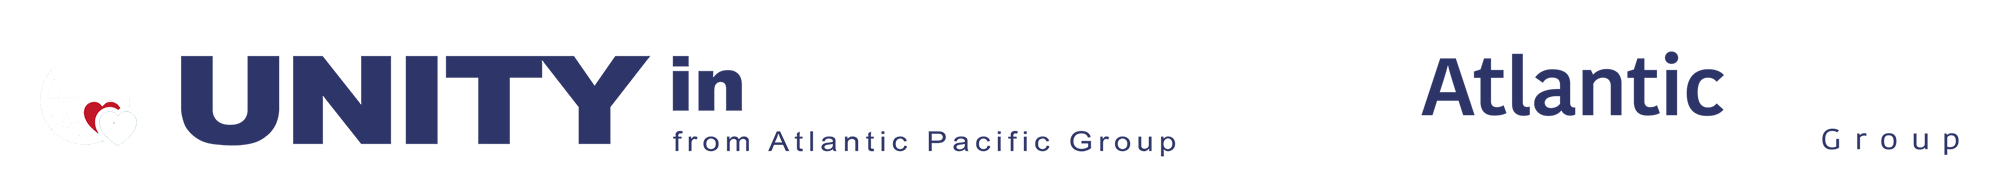 UnityInCommunity